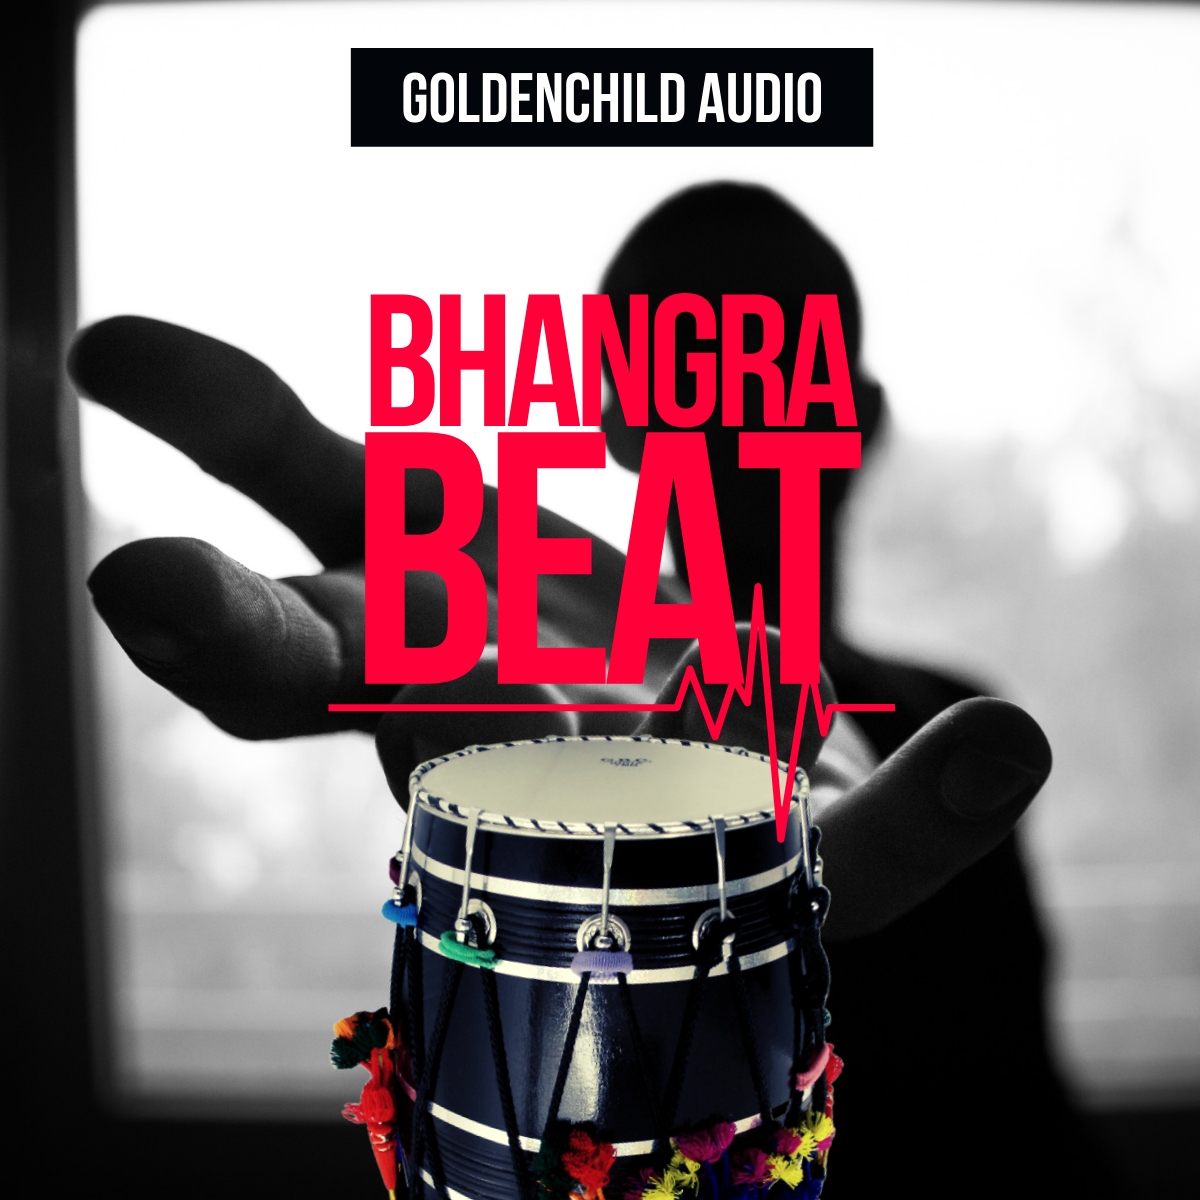 bhangra beat pack by goldenchild audio